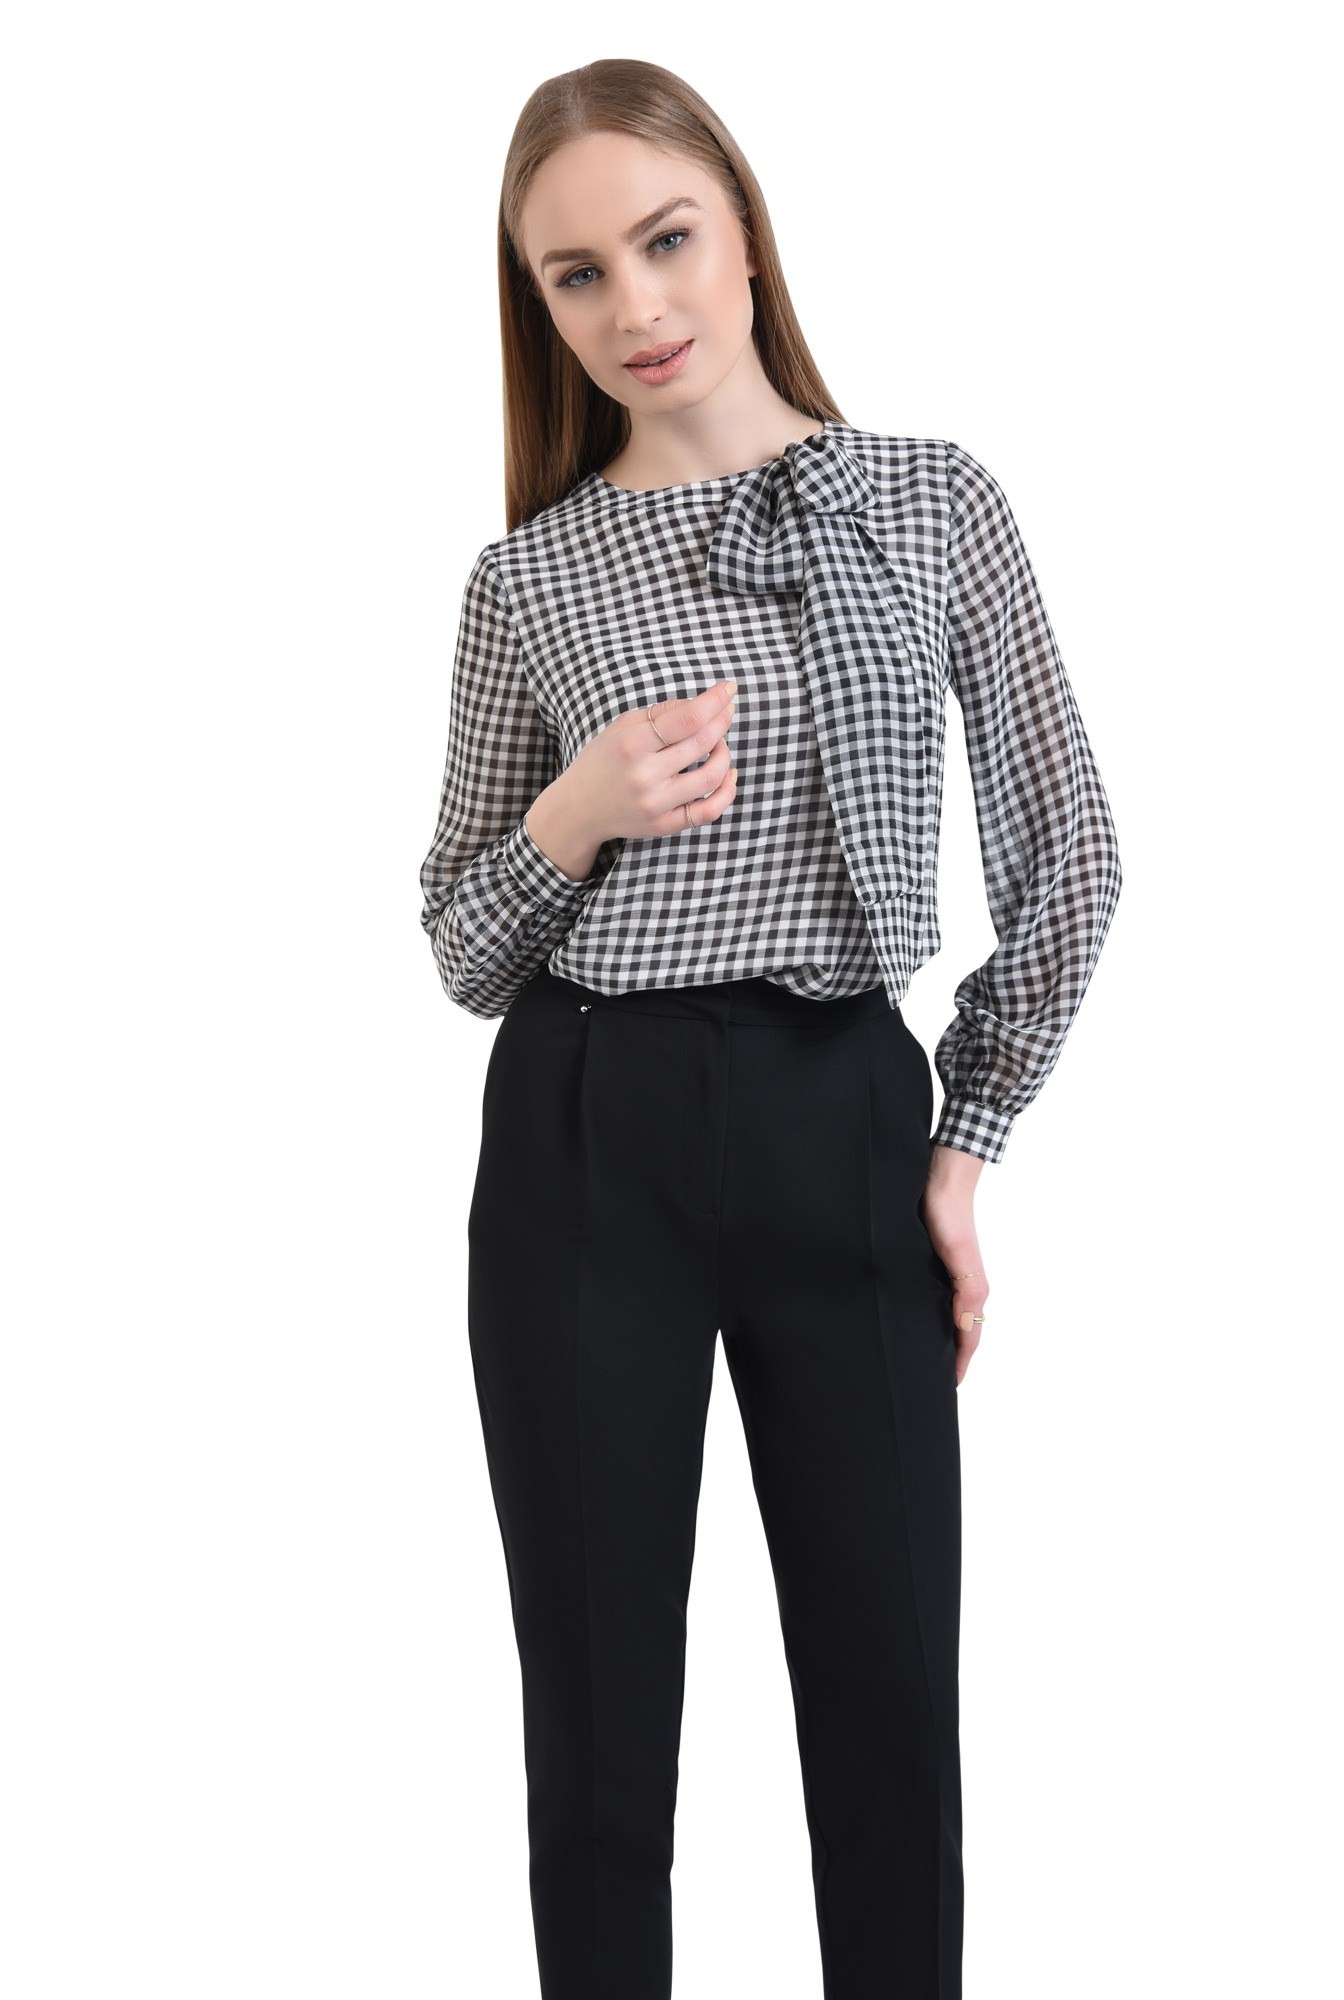 0 - Bluza casual, contrast, alb-negru